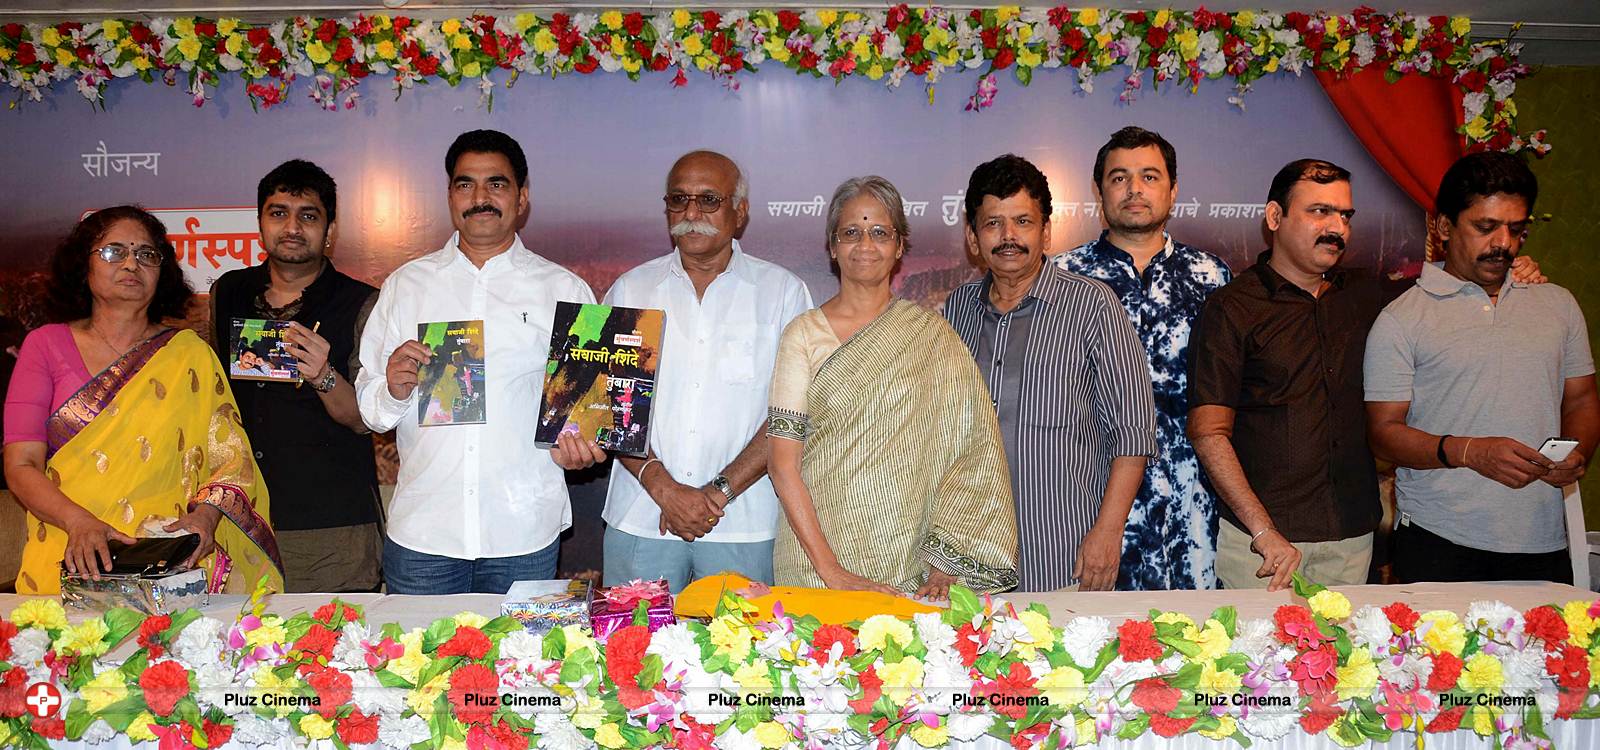 Launch of Book & Audio play Tumbara written by Sayaji Shinde Photos | Picture 541430